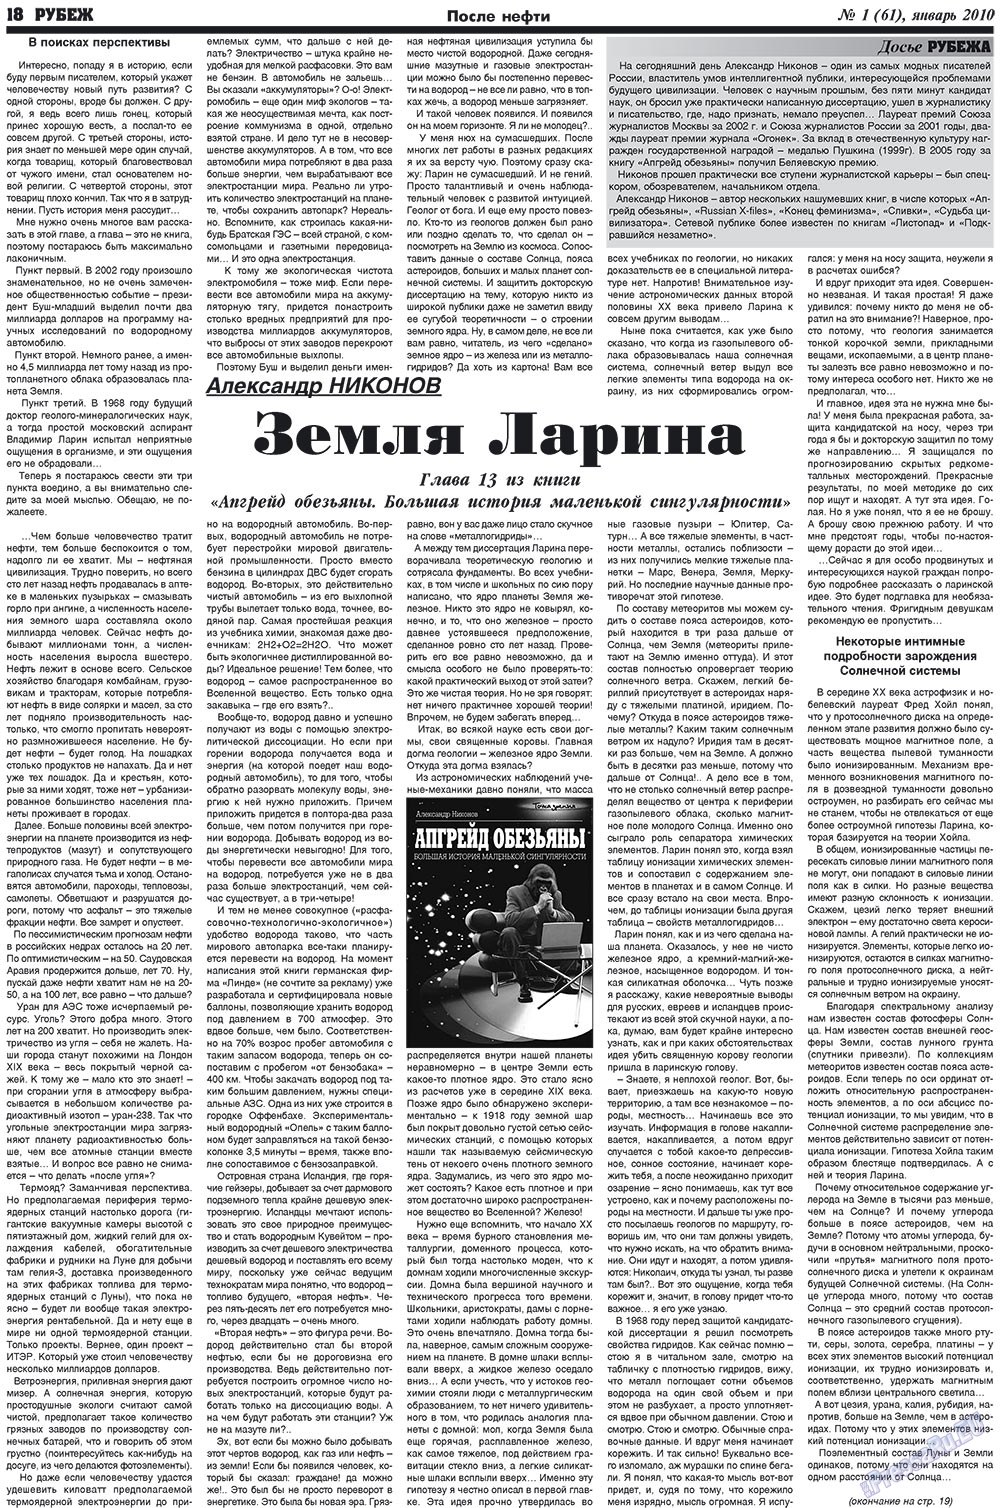 Рубеж, газета. 2010 №1 стр.18